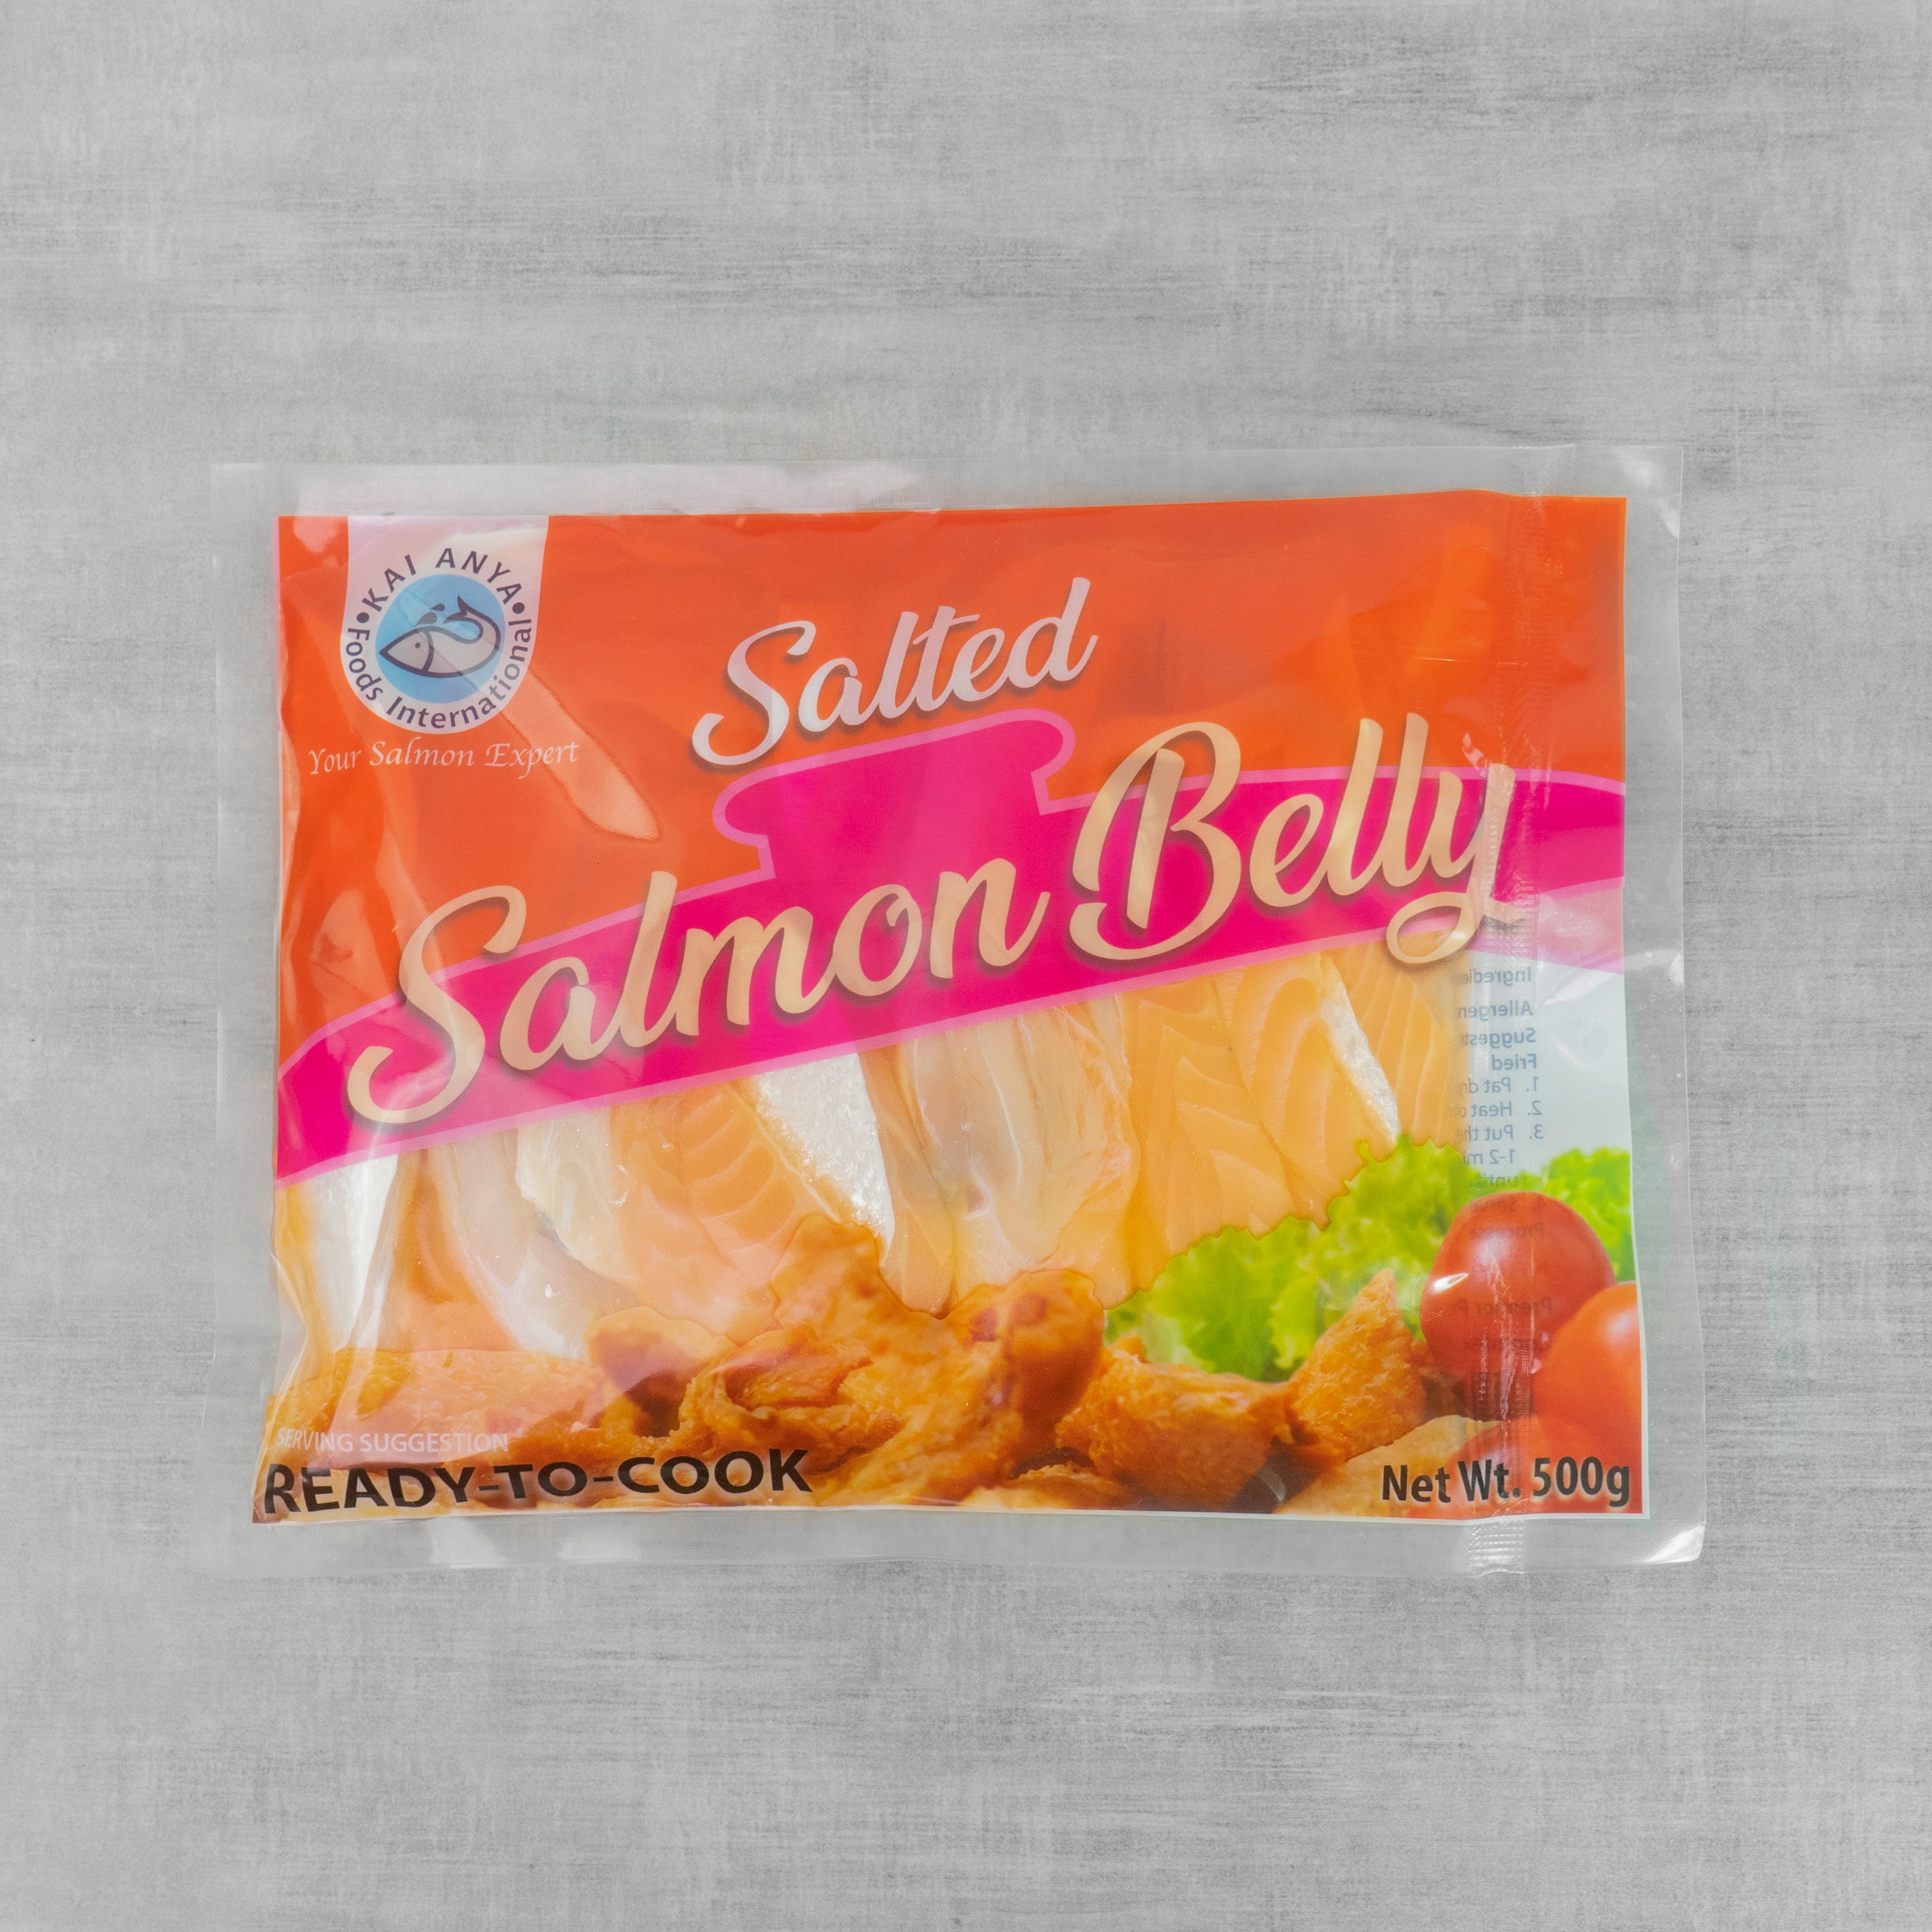 Kai Anya Salted Salmon Belly